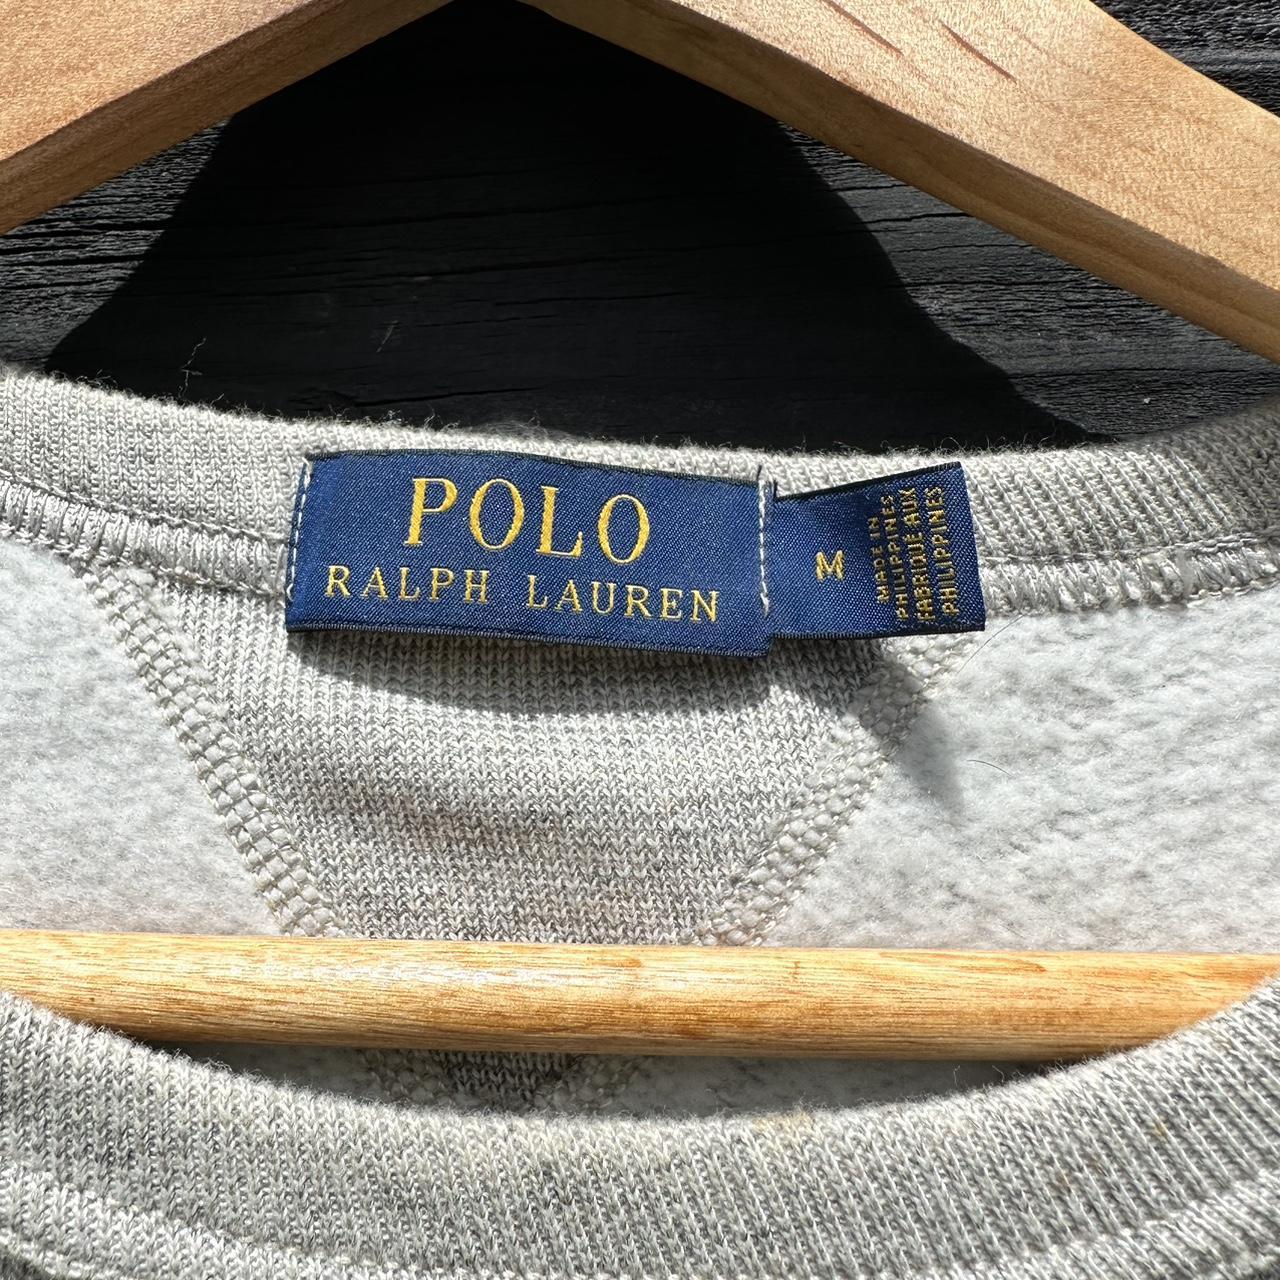 POLO RALPH LAUREN Men's Jumper - Medium - Depop